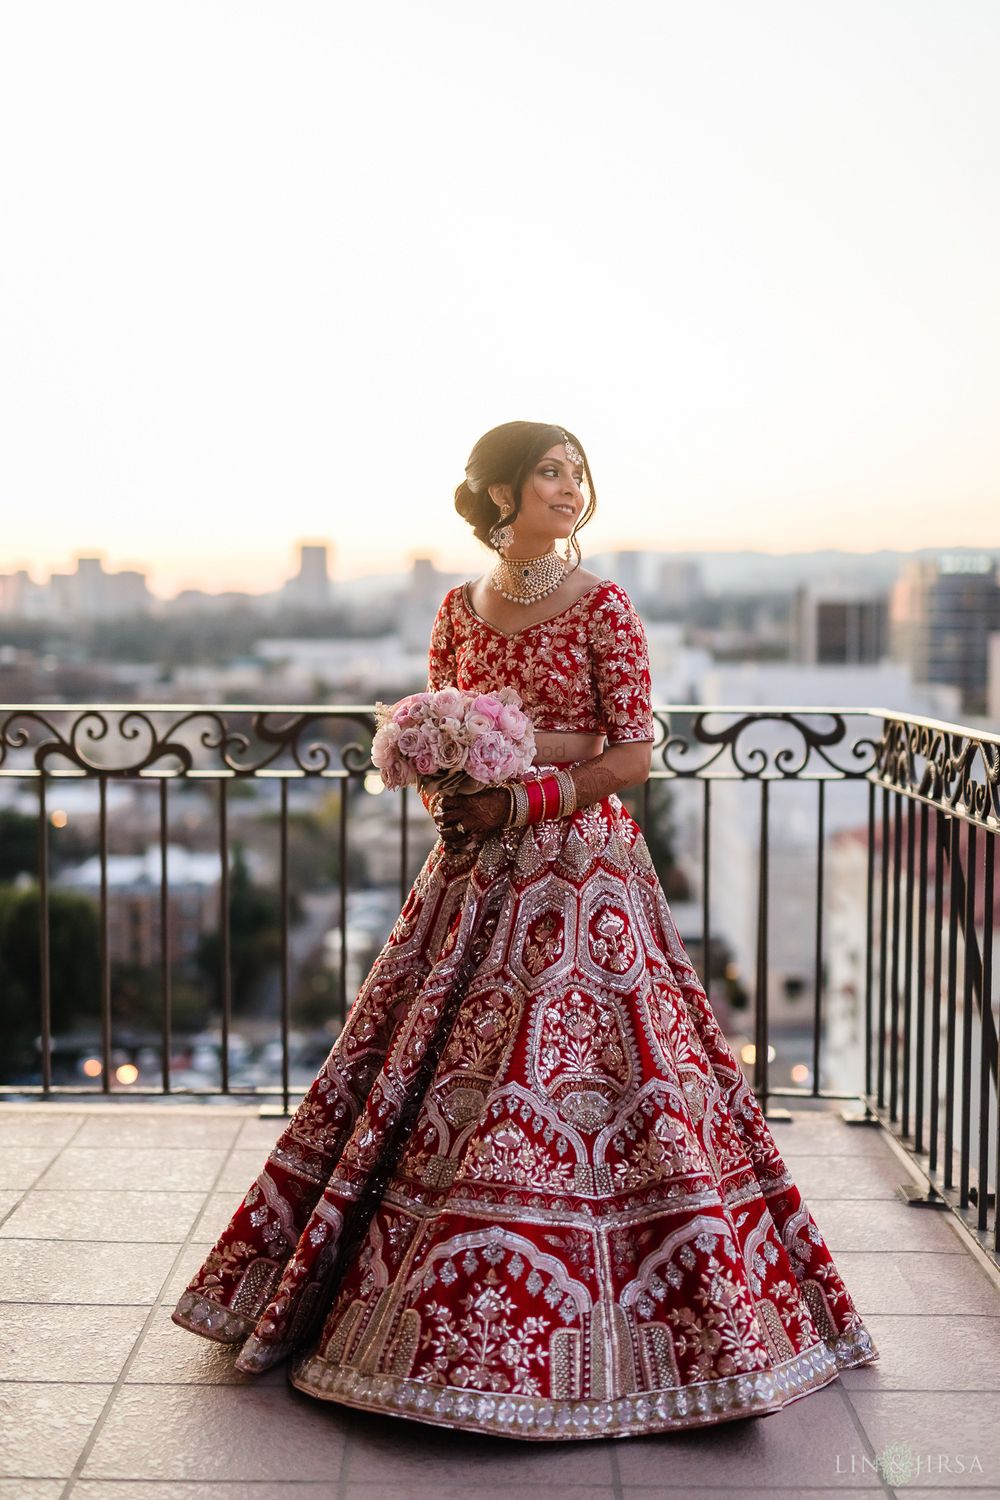 Photo By Mantra Ixe Fashion Villa - Bridal Wear